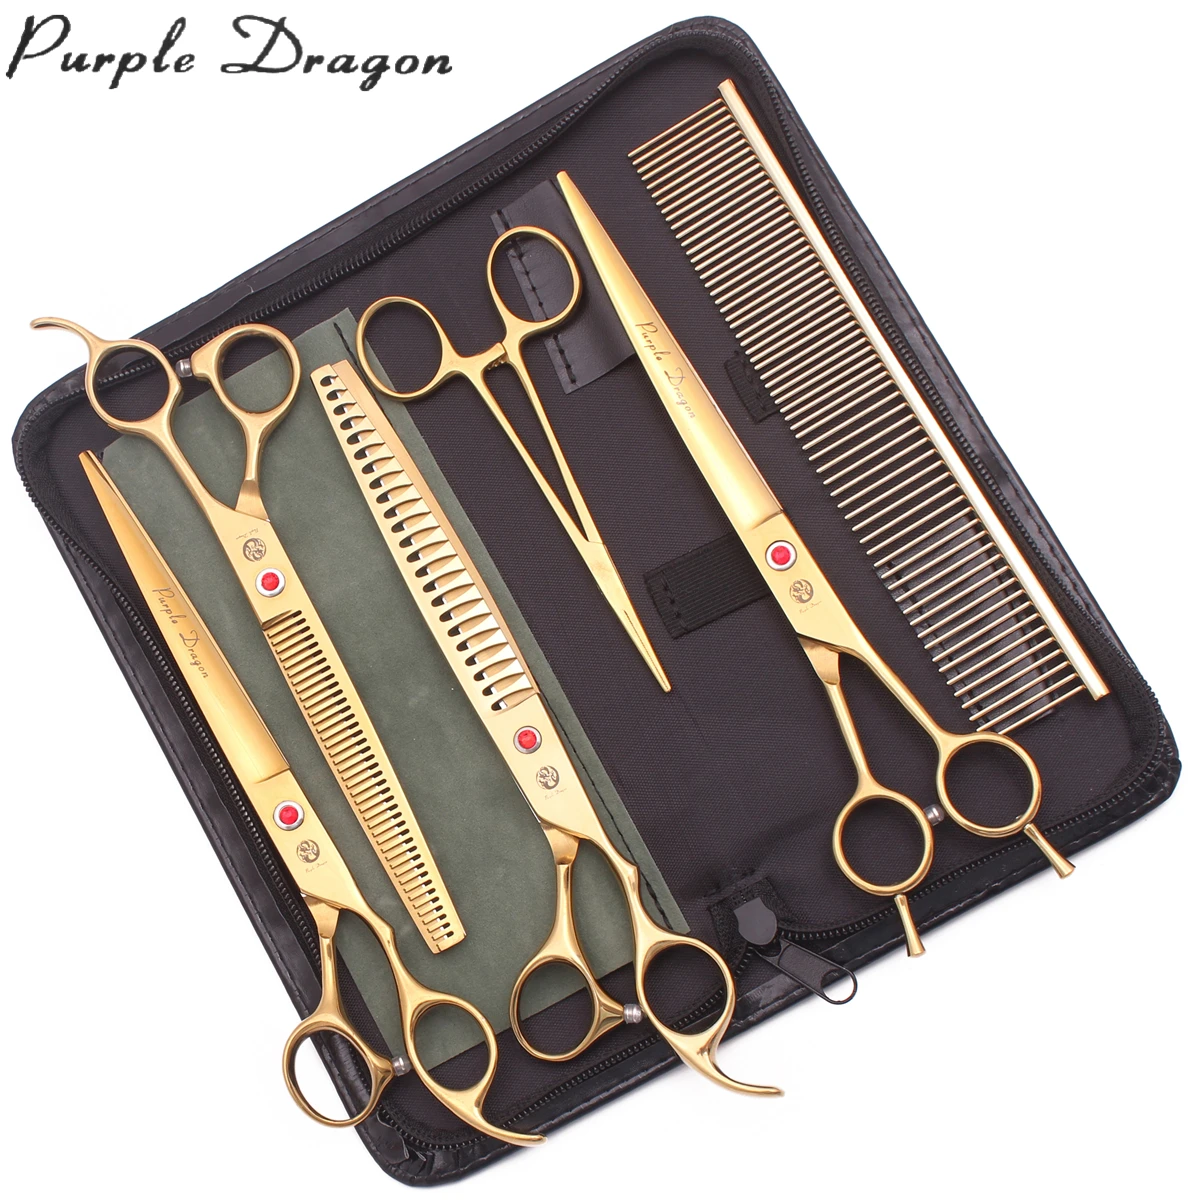 Purple Dragon 8" Japan 440C Dog Grooming Scissors Dropshipping Pet Scissors Kit Thinning Shears Chunker Curved Scissors Z3015